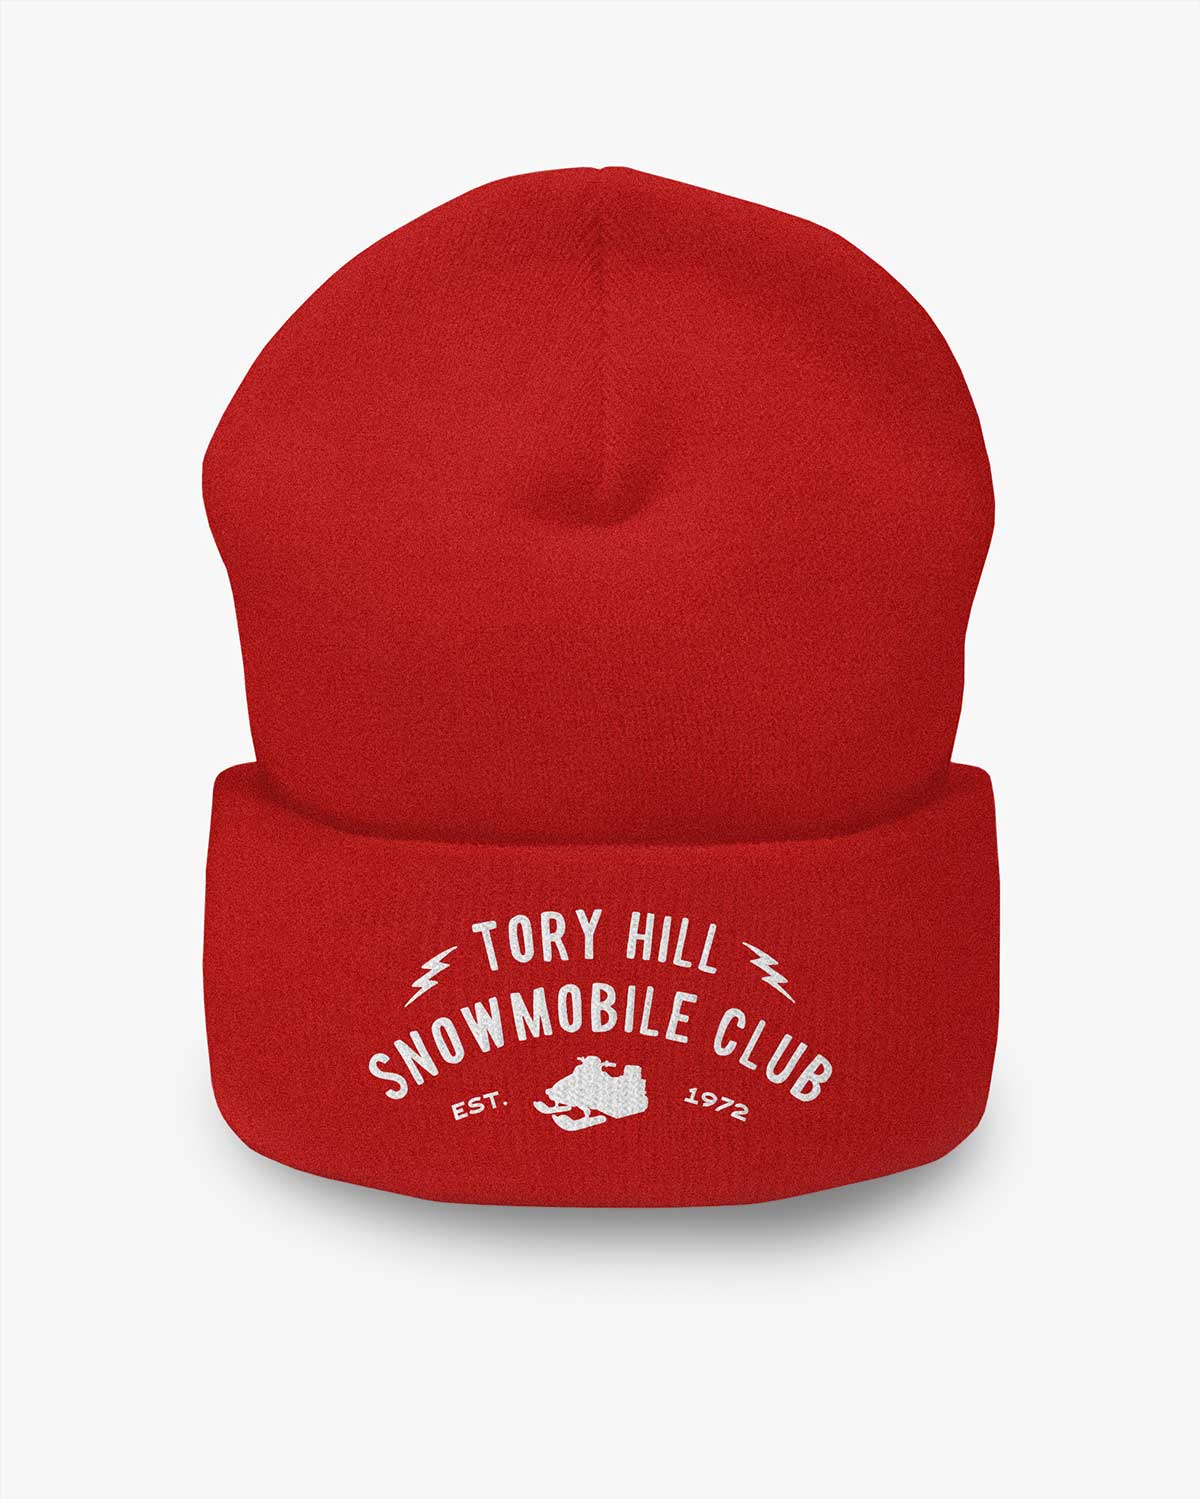 Snowmobile Club - Tory Hill - Toque